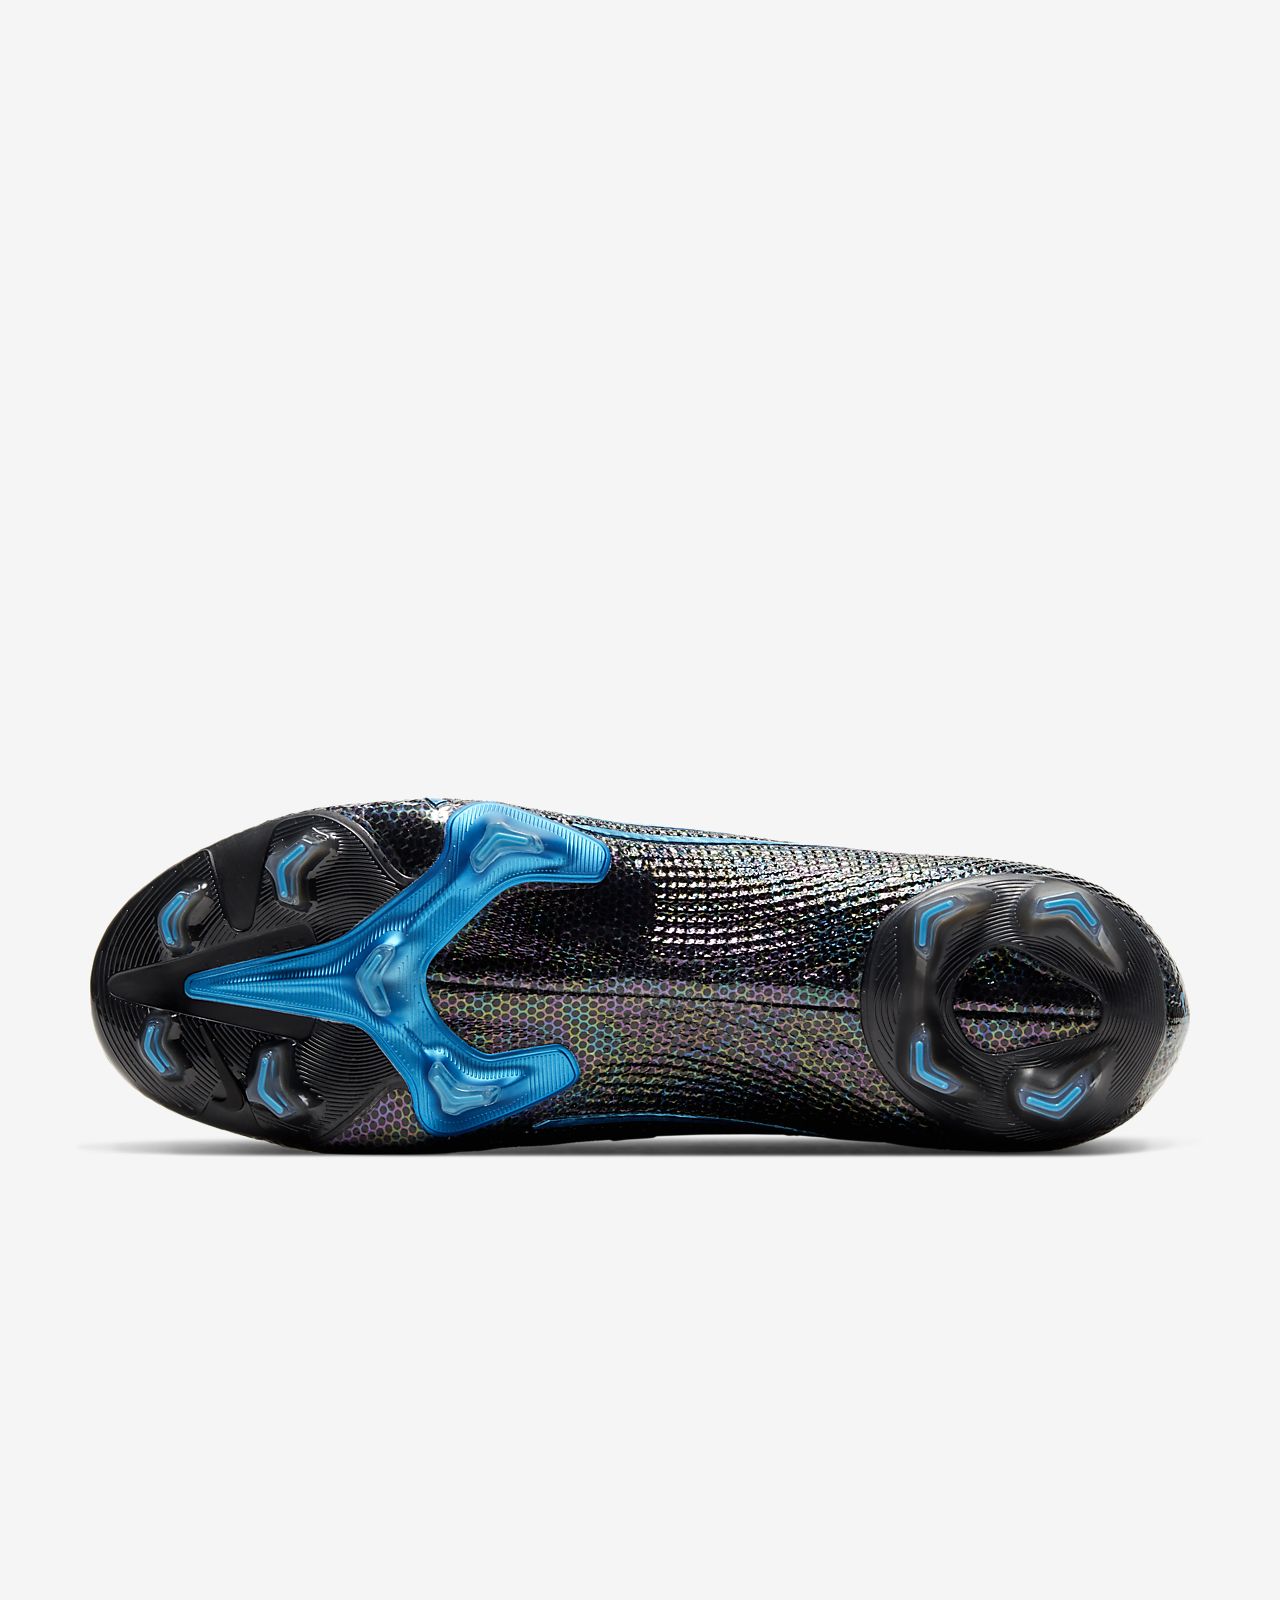 Sepatu Futsal Nike Mercurial Superfly 7 Elite Blue. Shopee